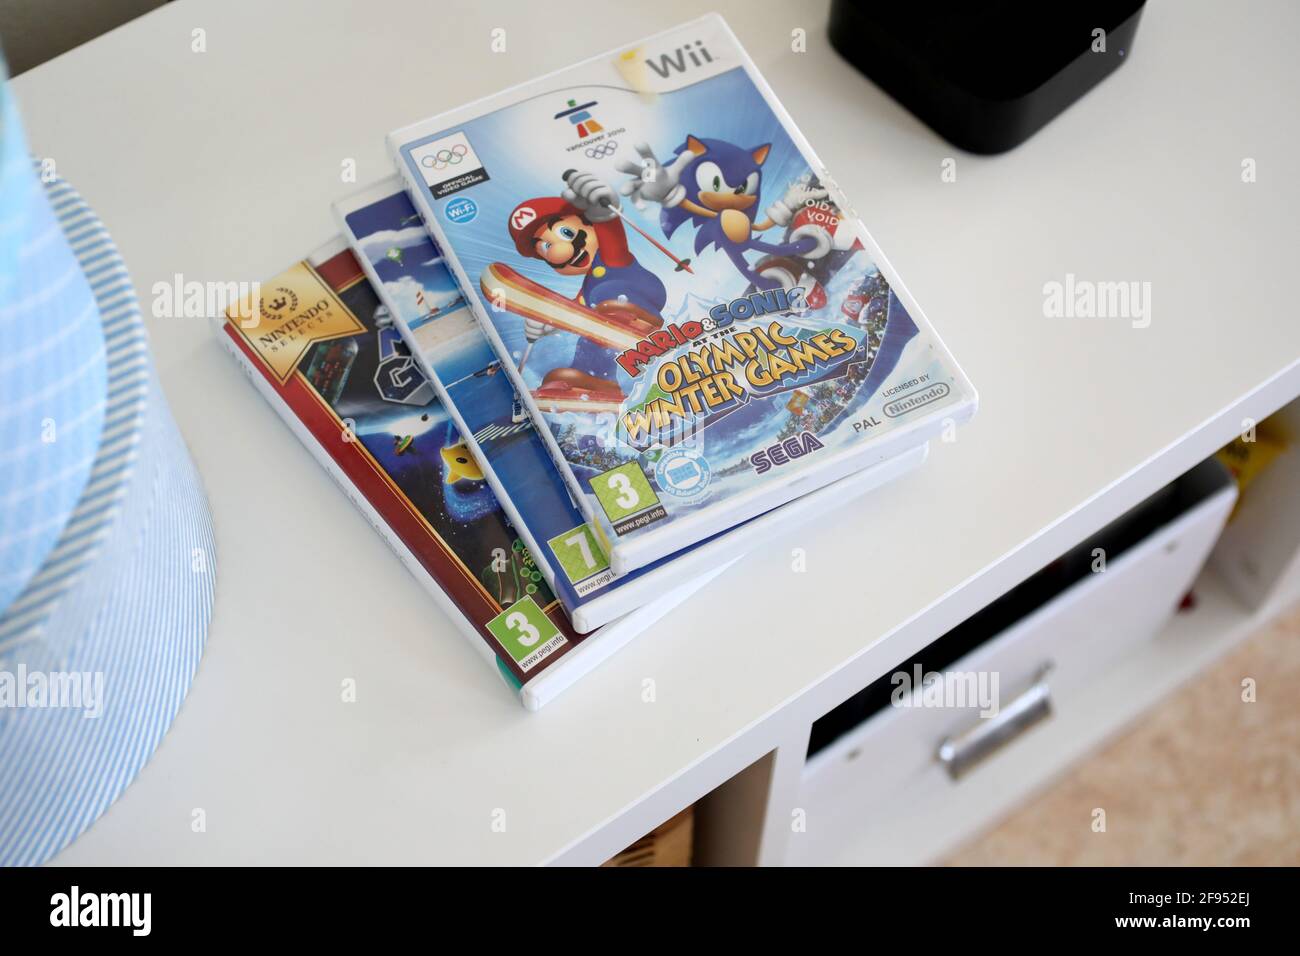 Mario & Sonic olympic winter games Nintendo wii game Stock Photo - Alamy